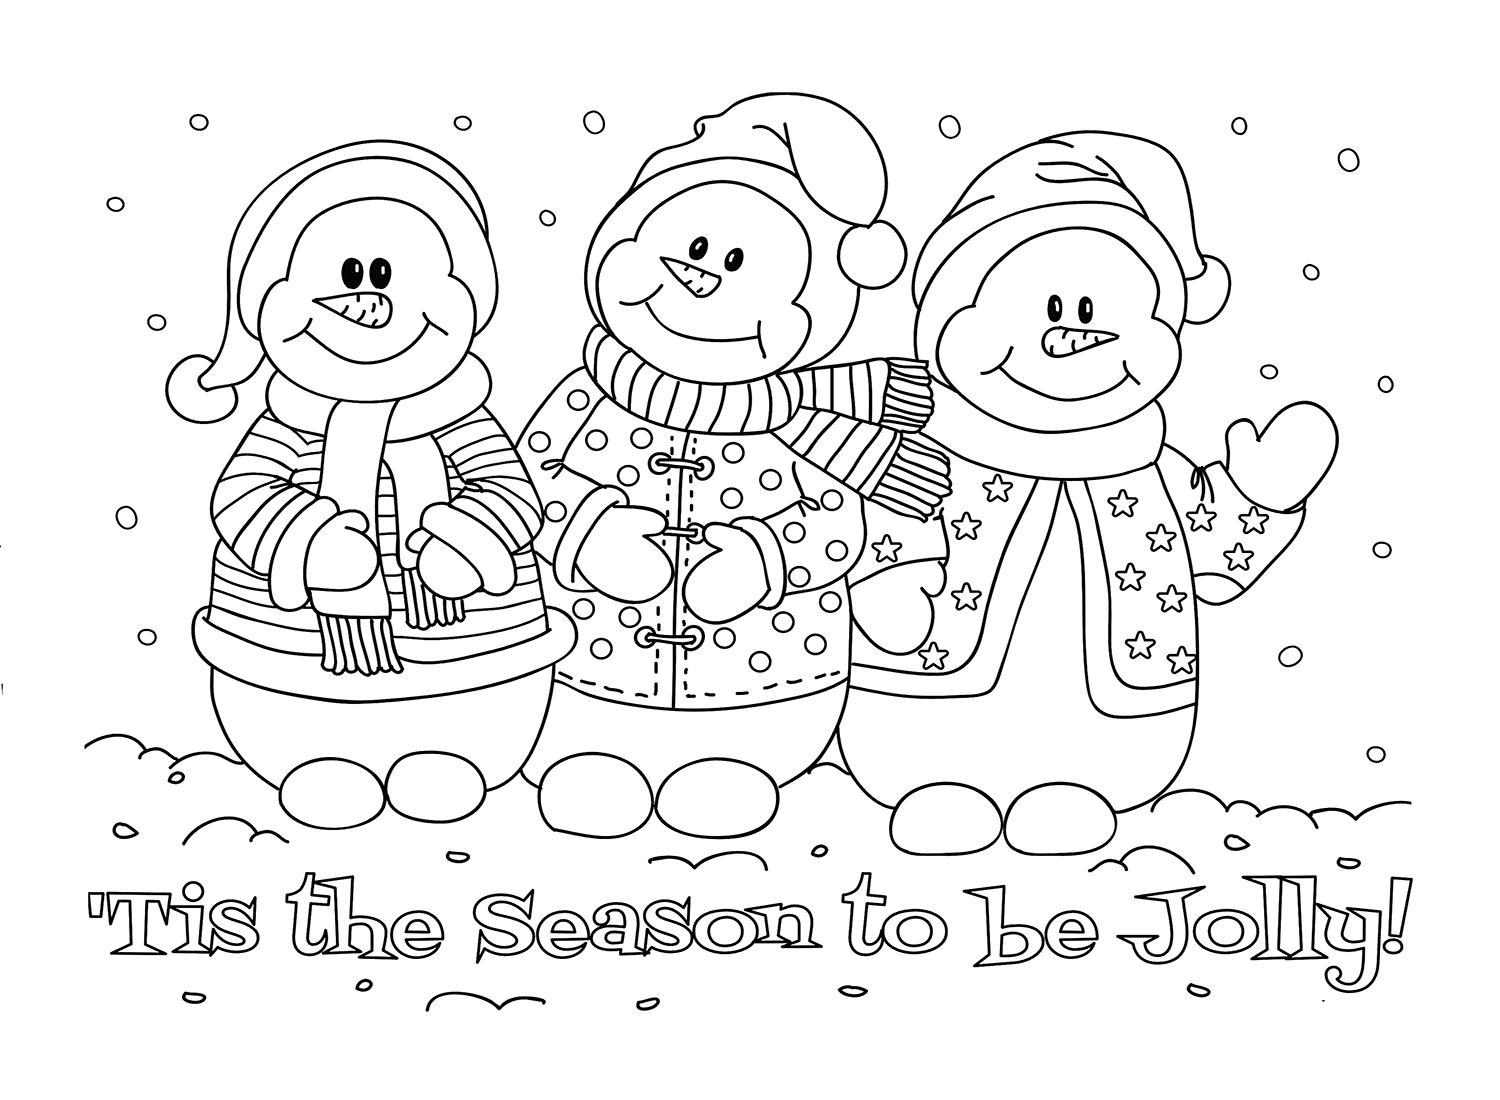 Раскраски Три снеговика из мультфильма "Снеговик"